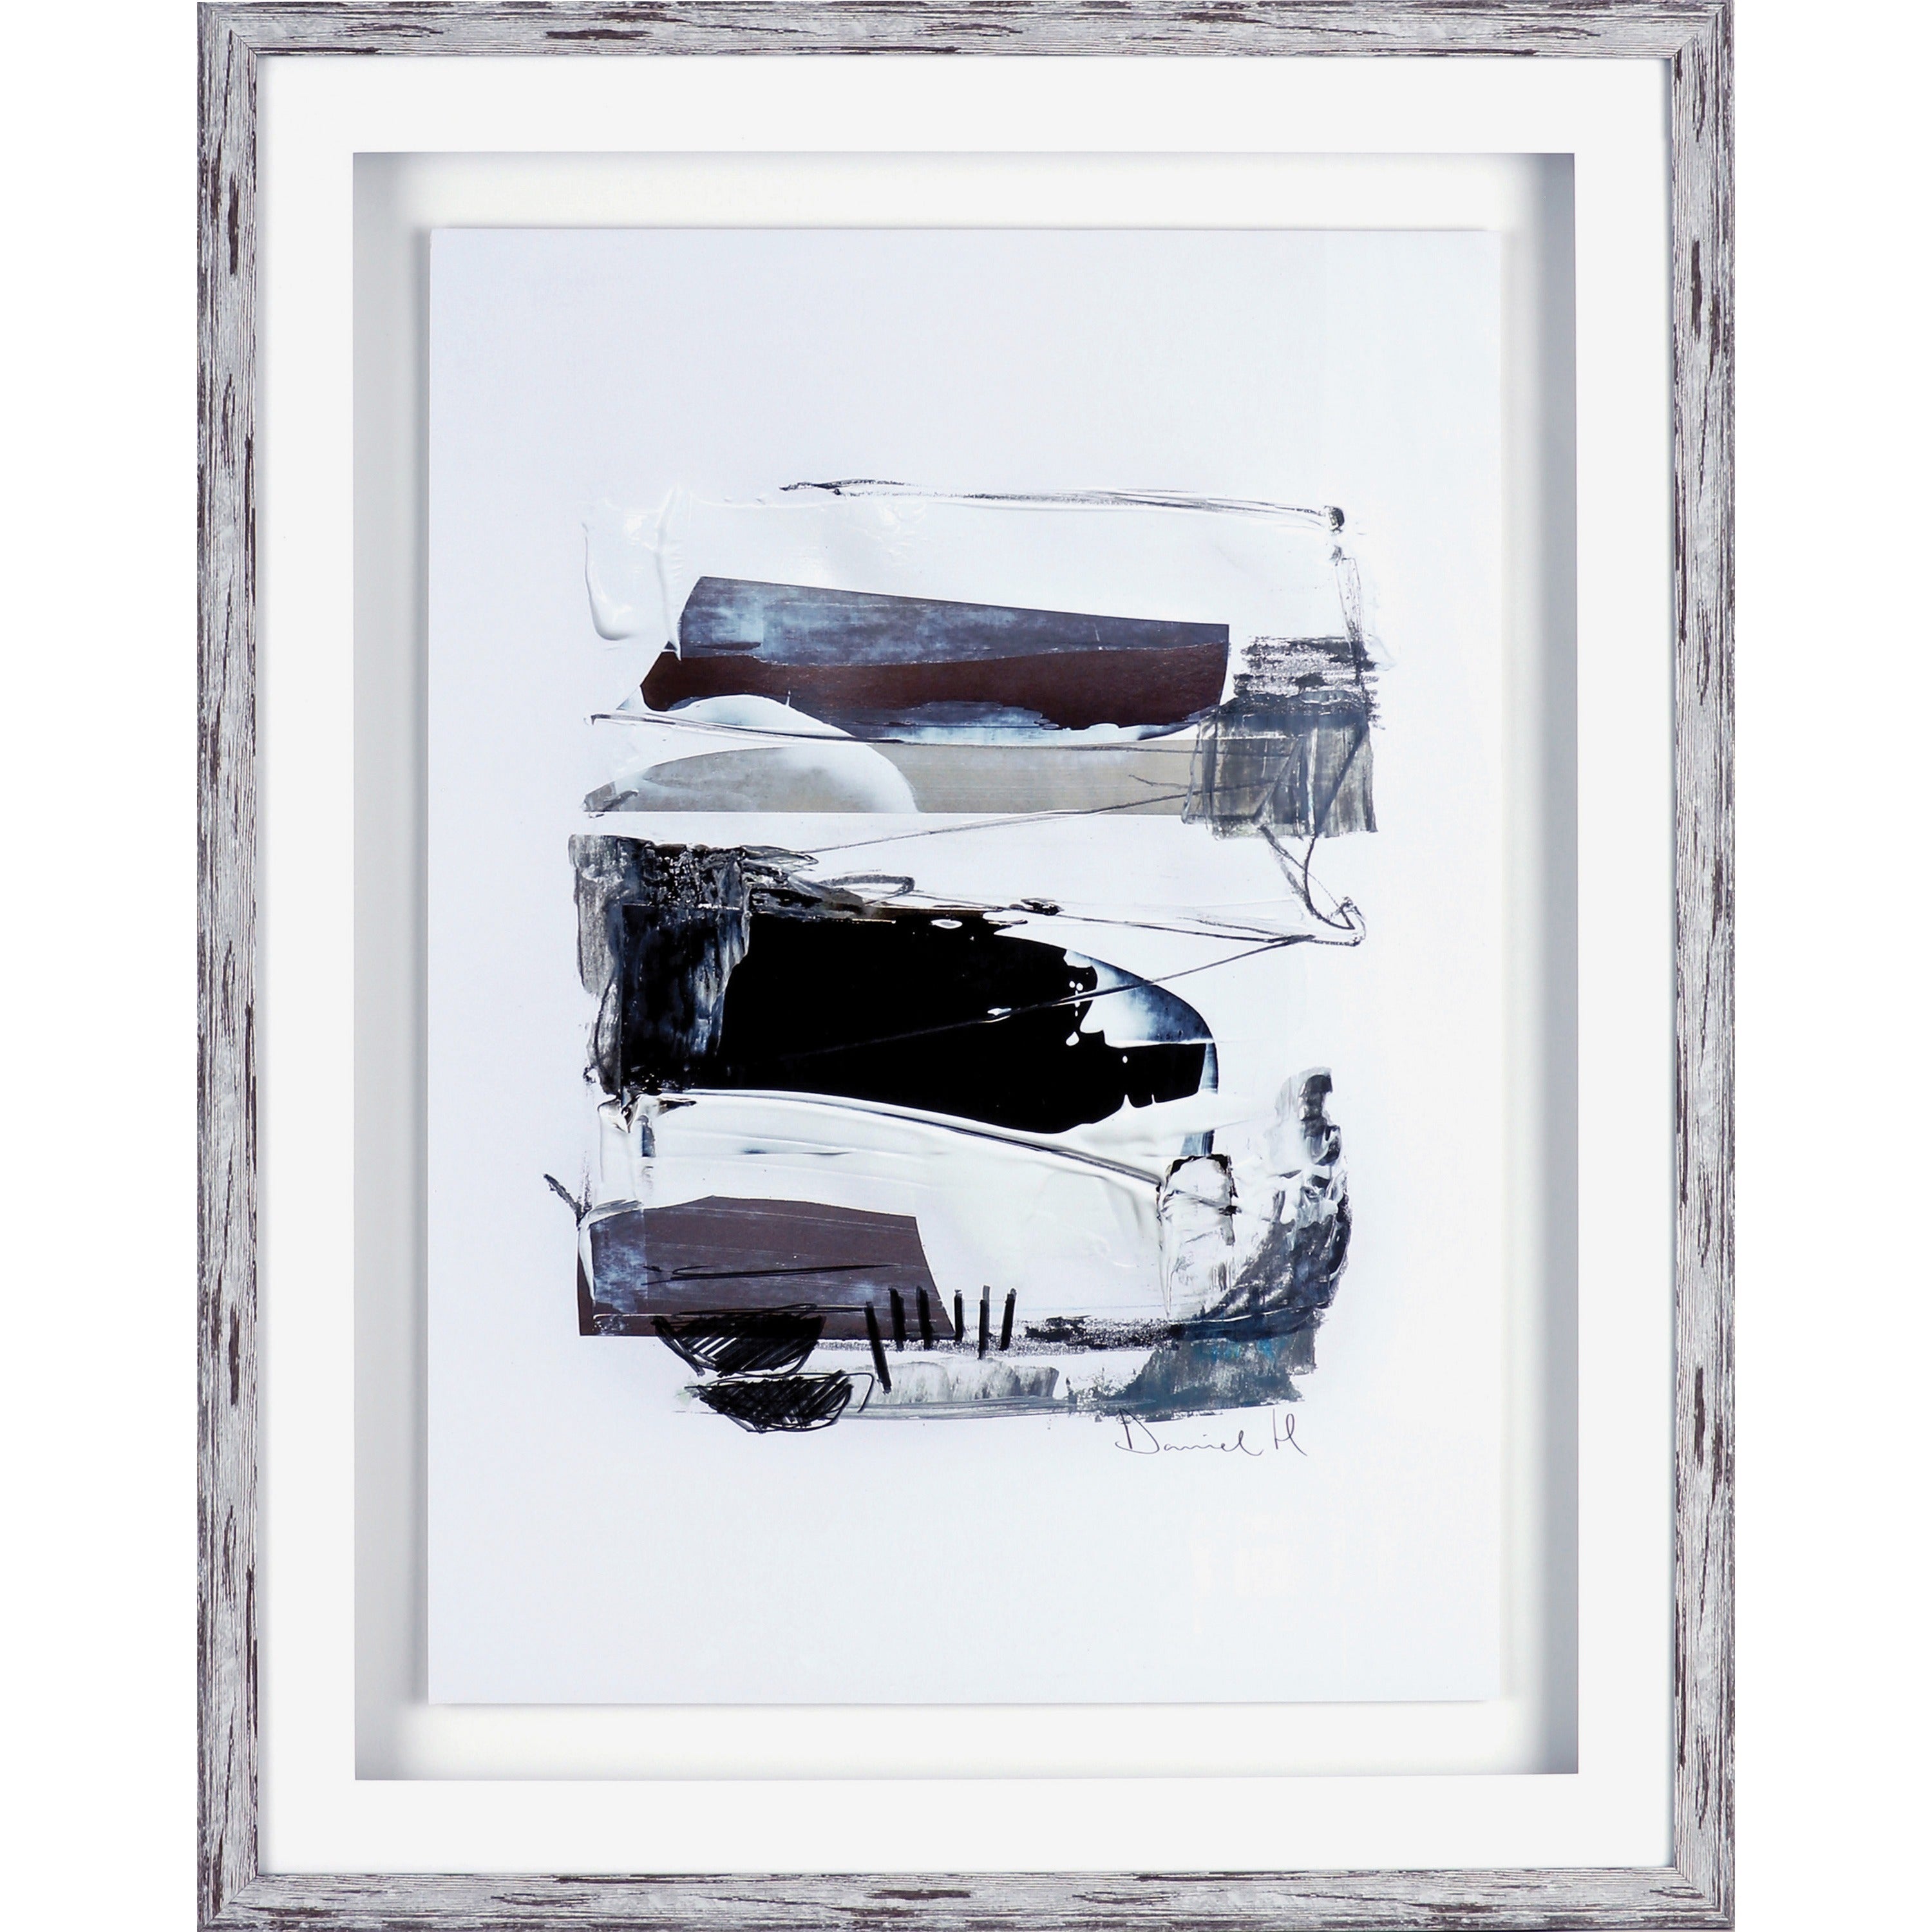 Lorell Abstract II Framed Artwork - 27.50" x 35.50" Frame Size - 1 Each - Black, White